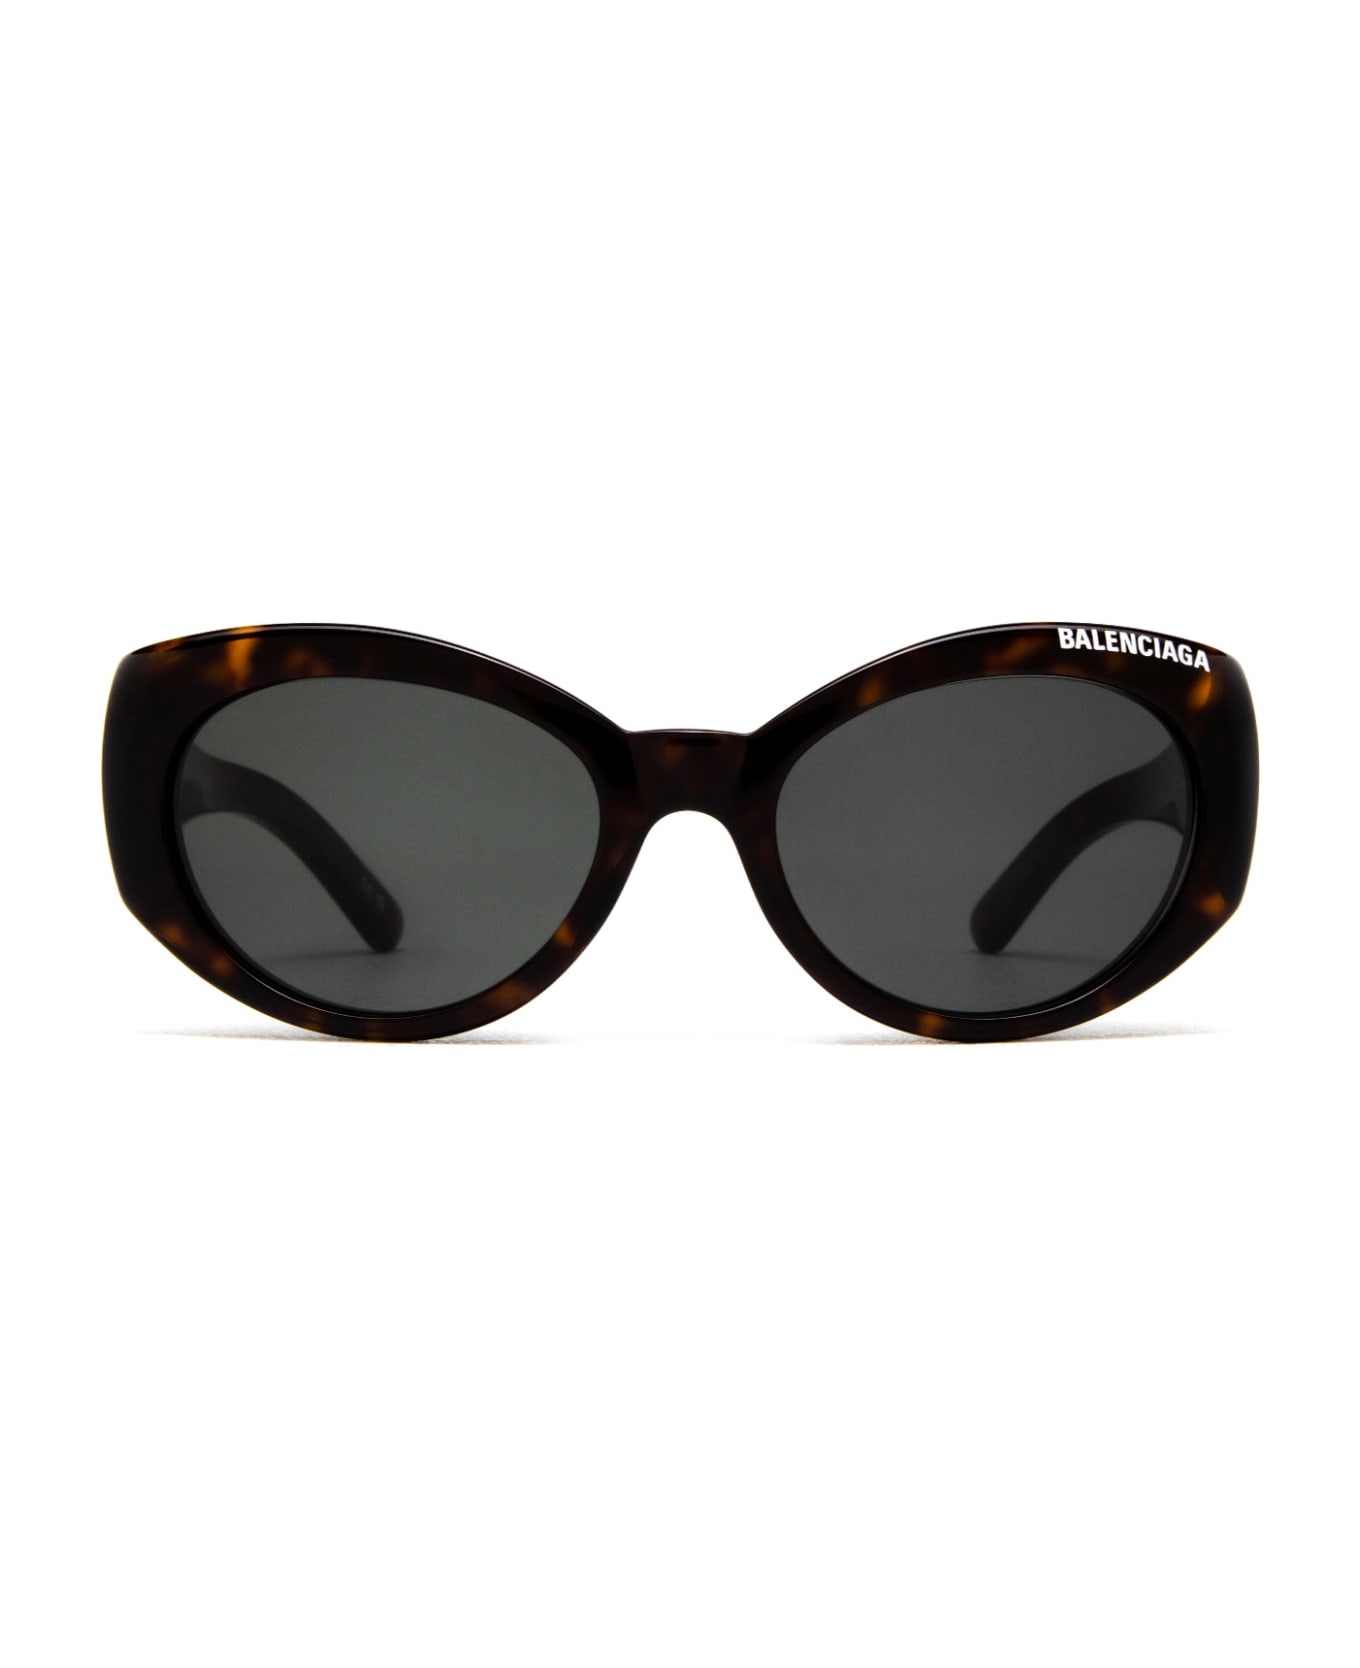 Balenciaga Eyewear Flame Effect Round Frame Sunglasses - Havana